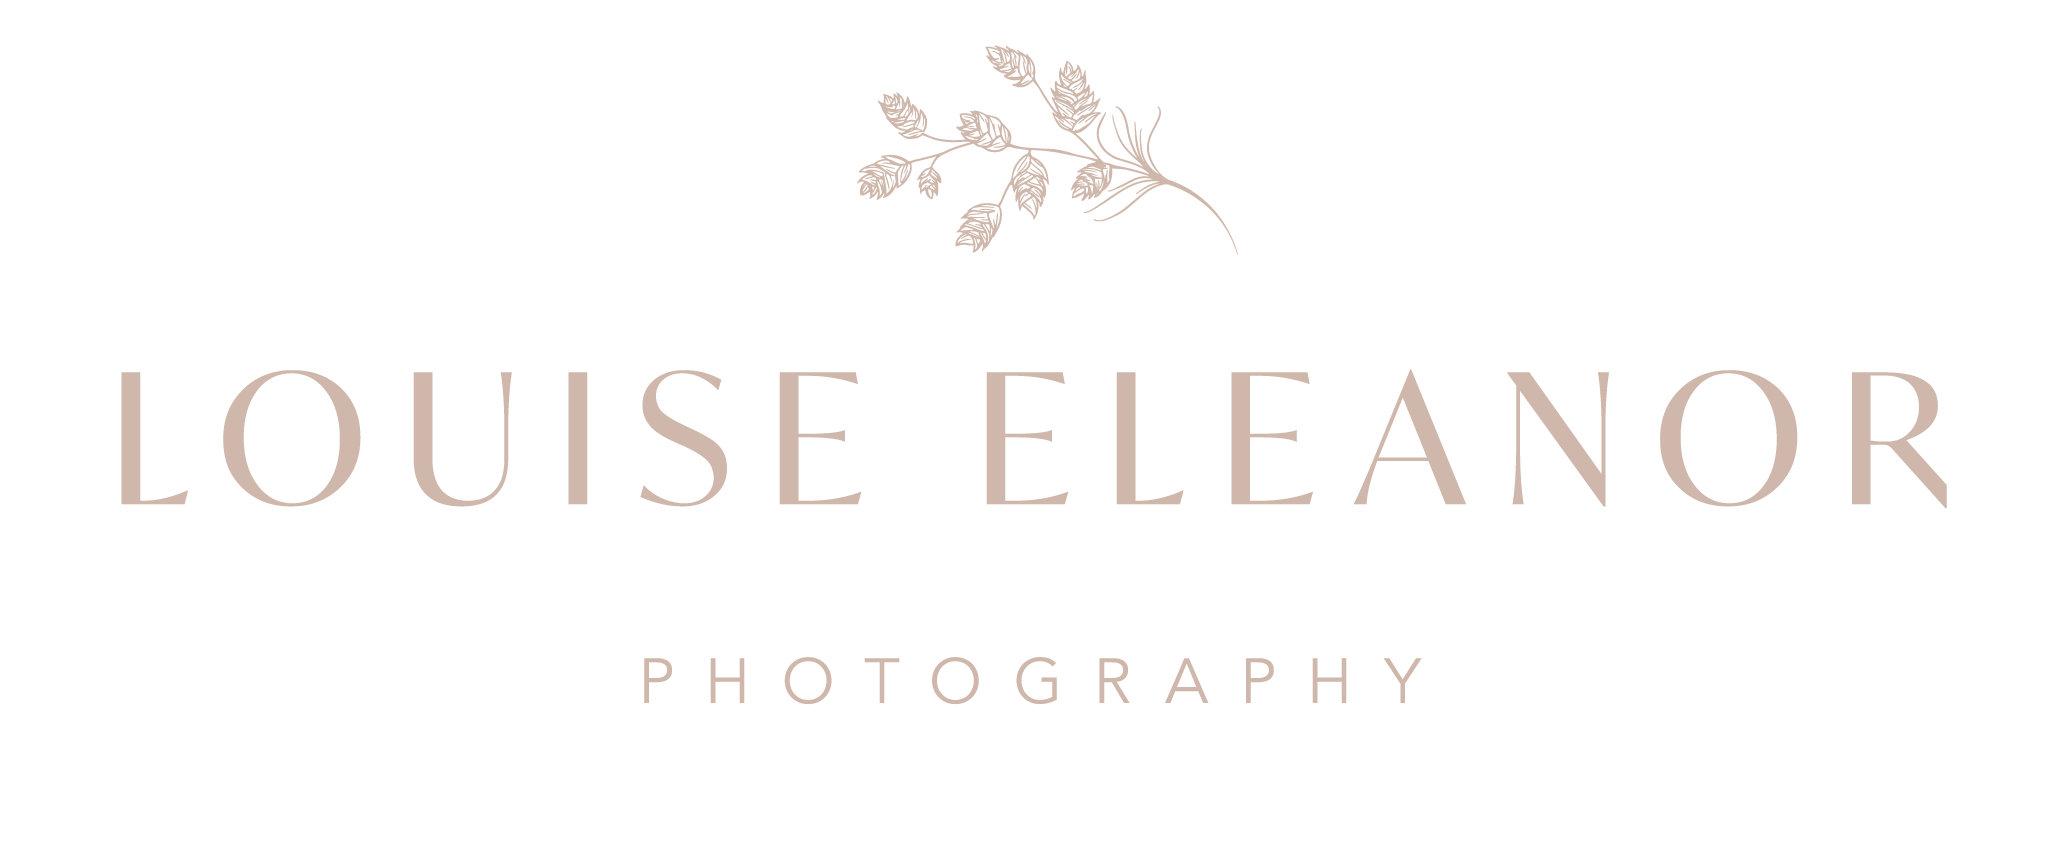 Louise Eleanor Photography